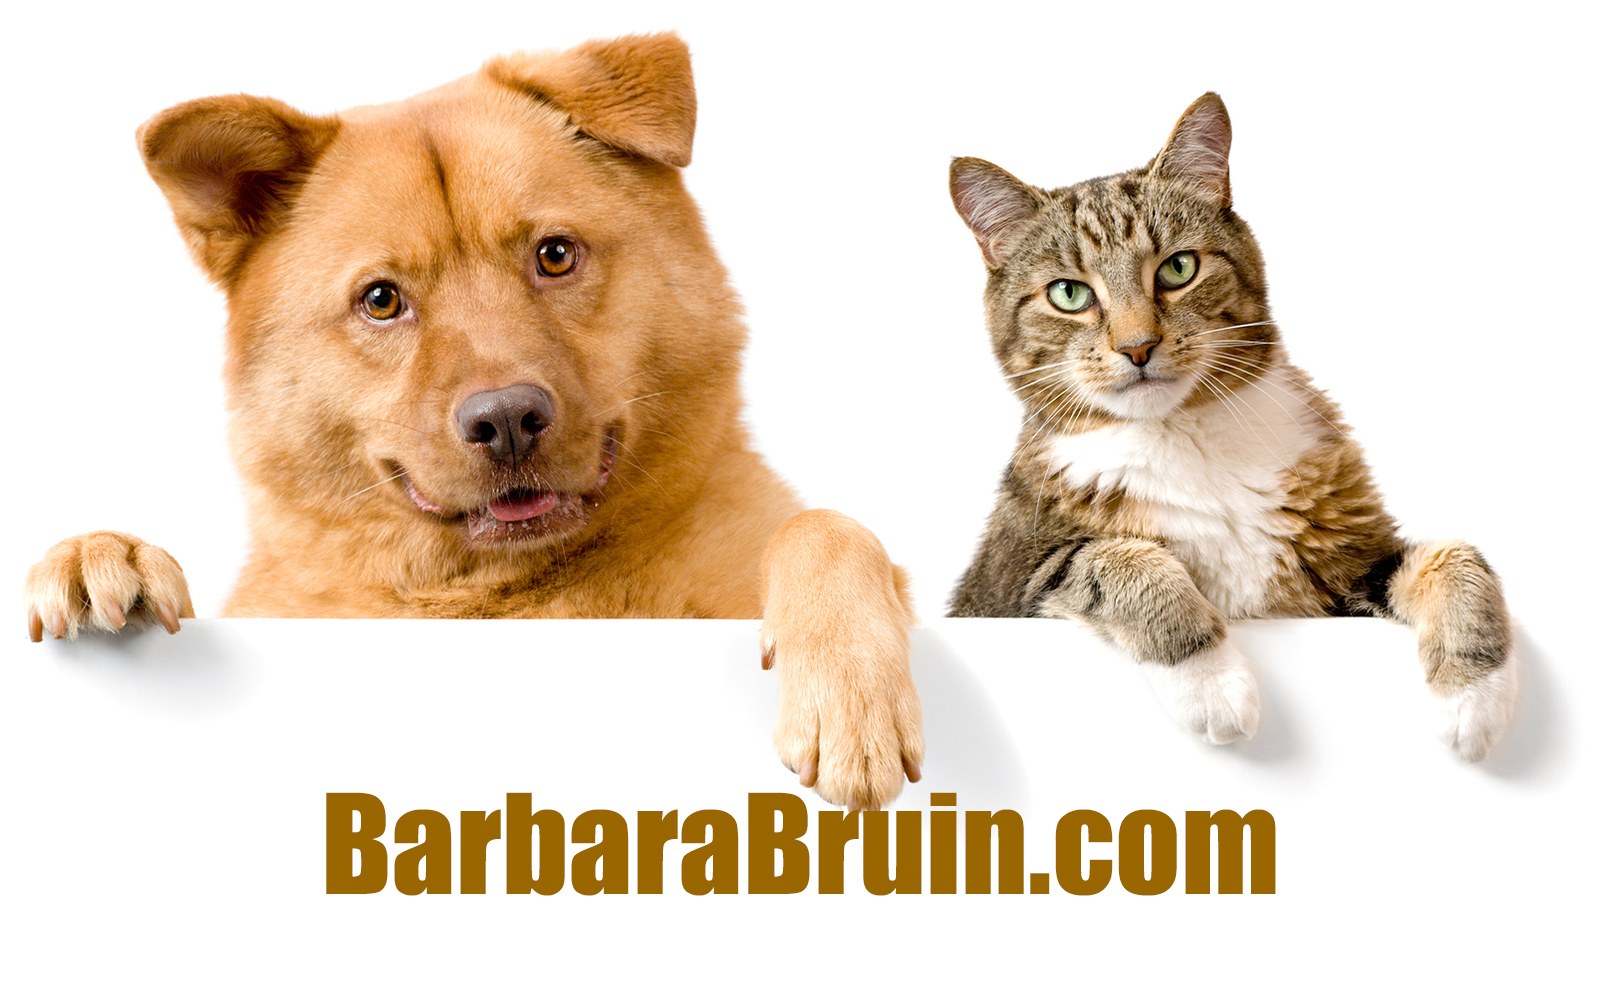 BarbaraBruin.com